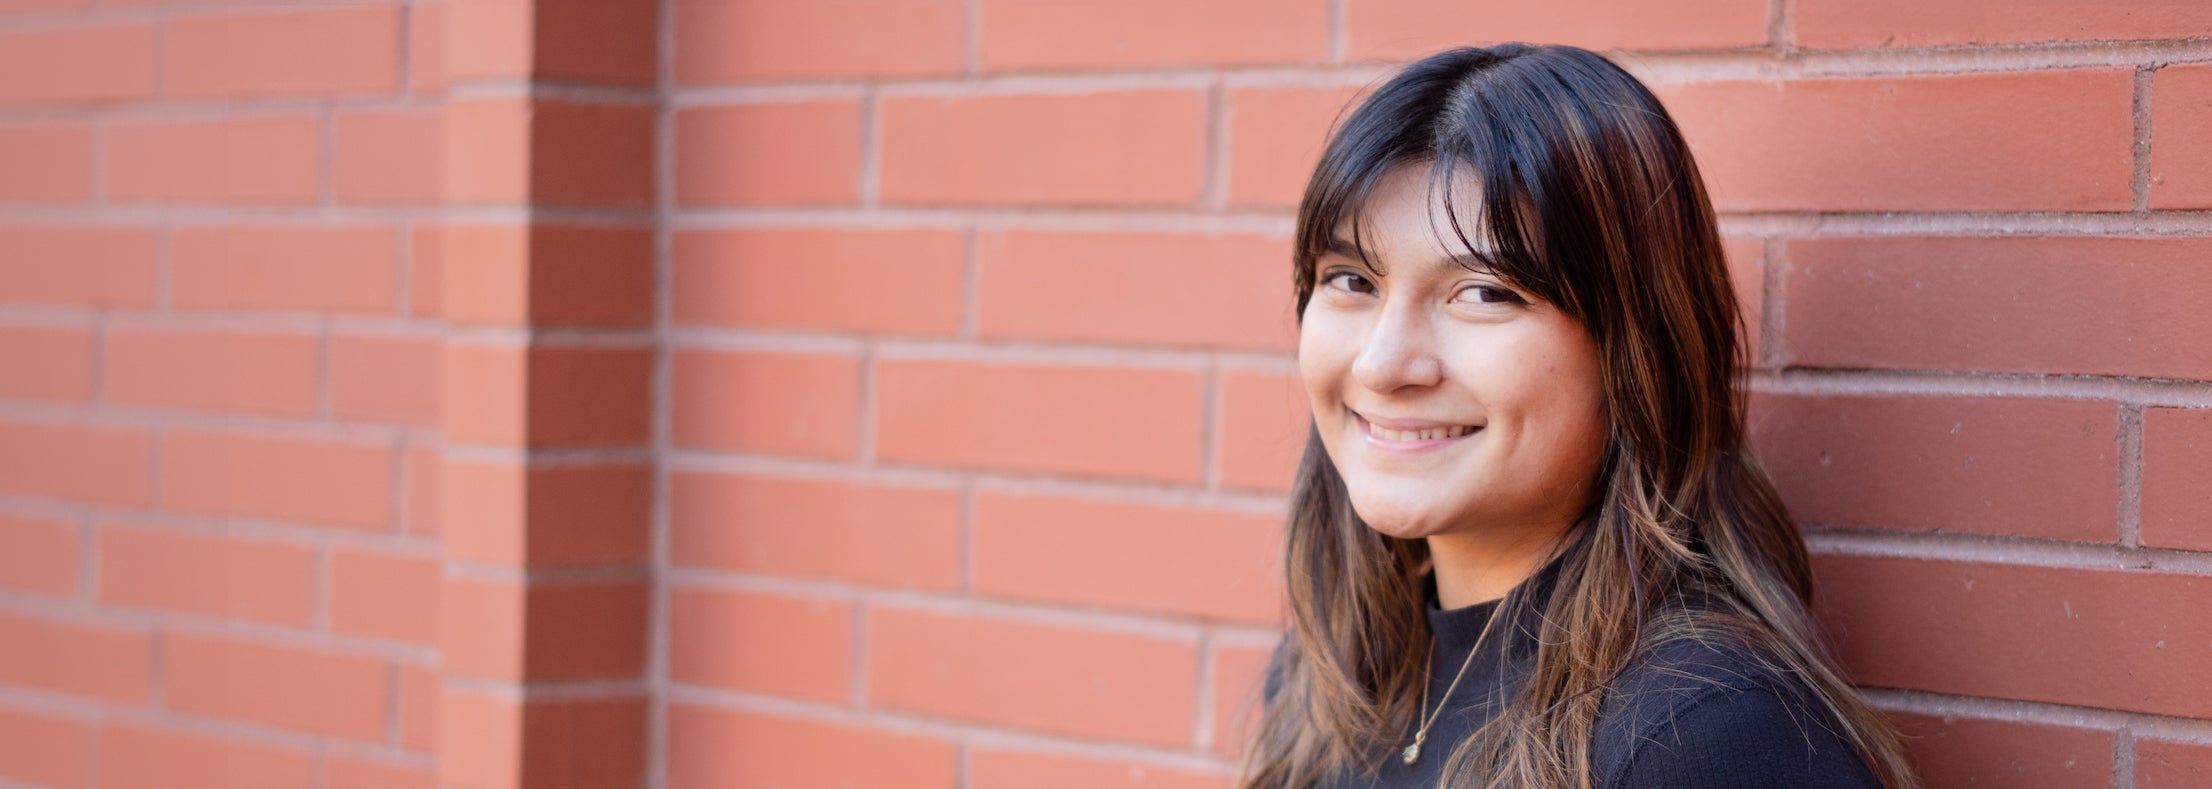 Samantha Delgado smiling and leaning against a brick wall